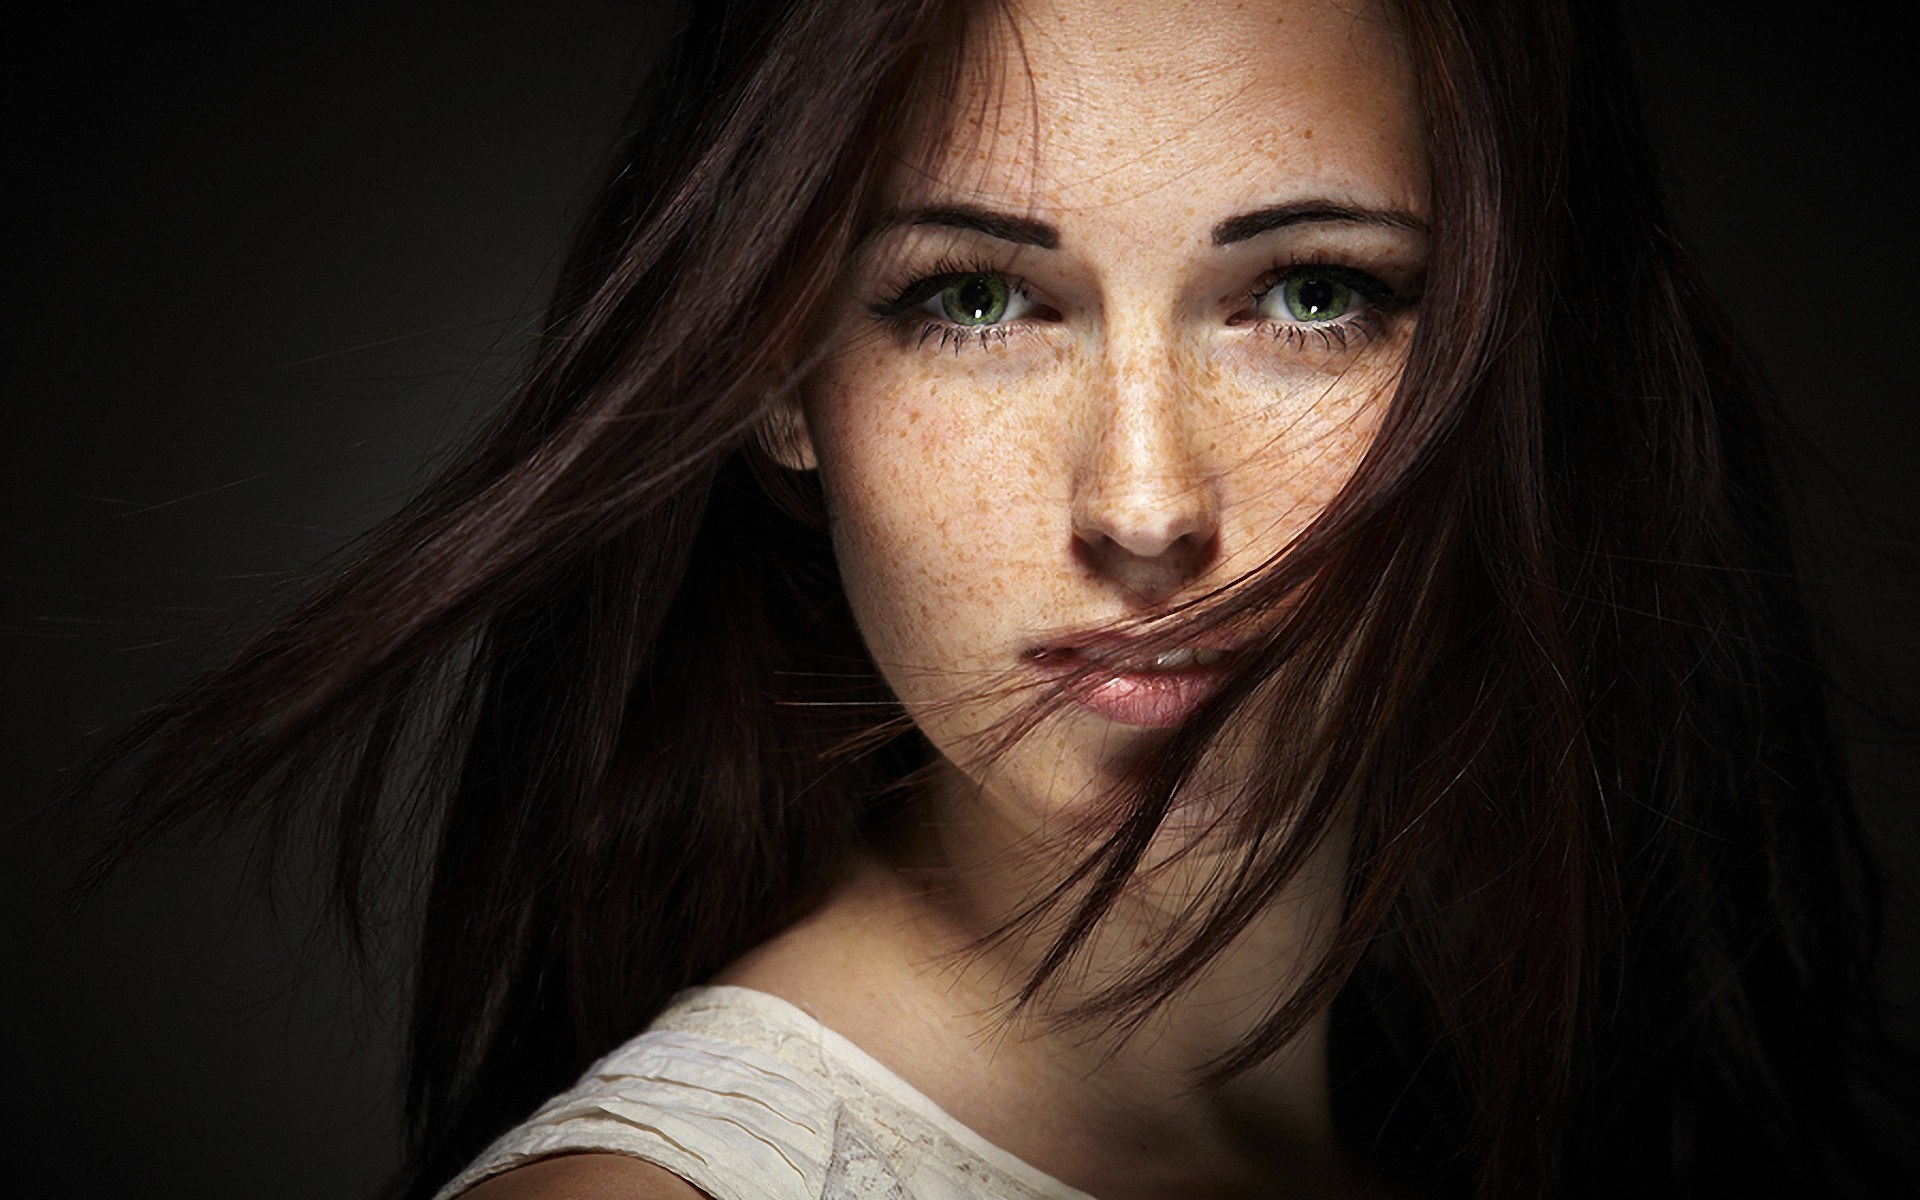 Beauty Girl Freckles Green Eyes Portrait Photo